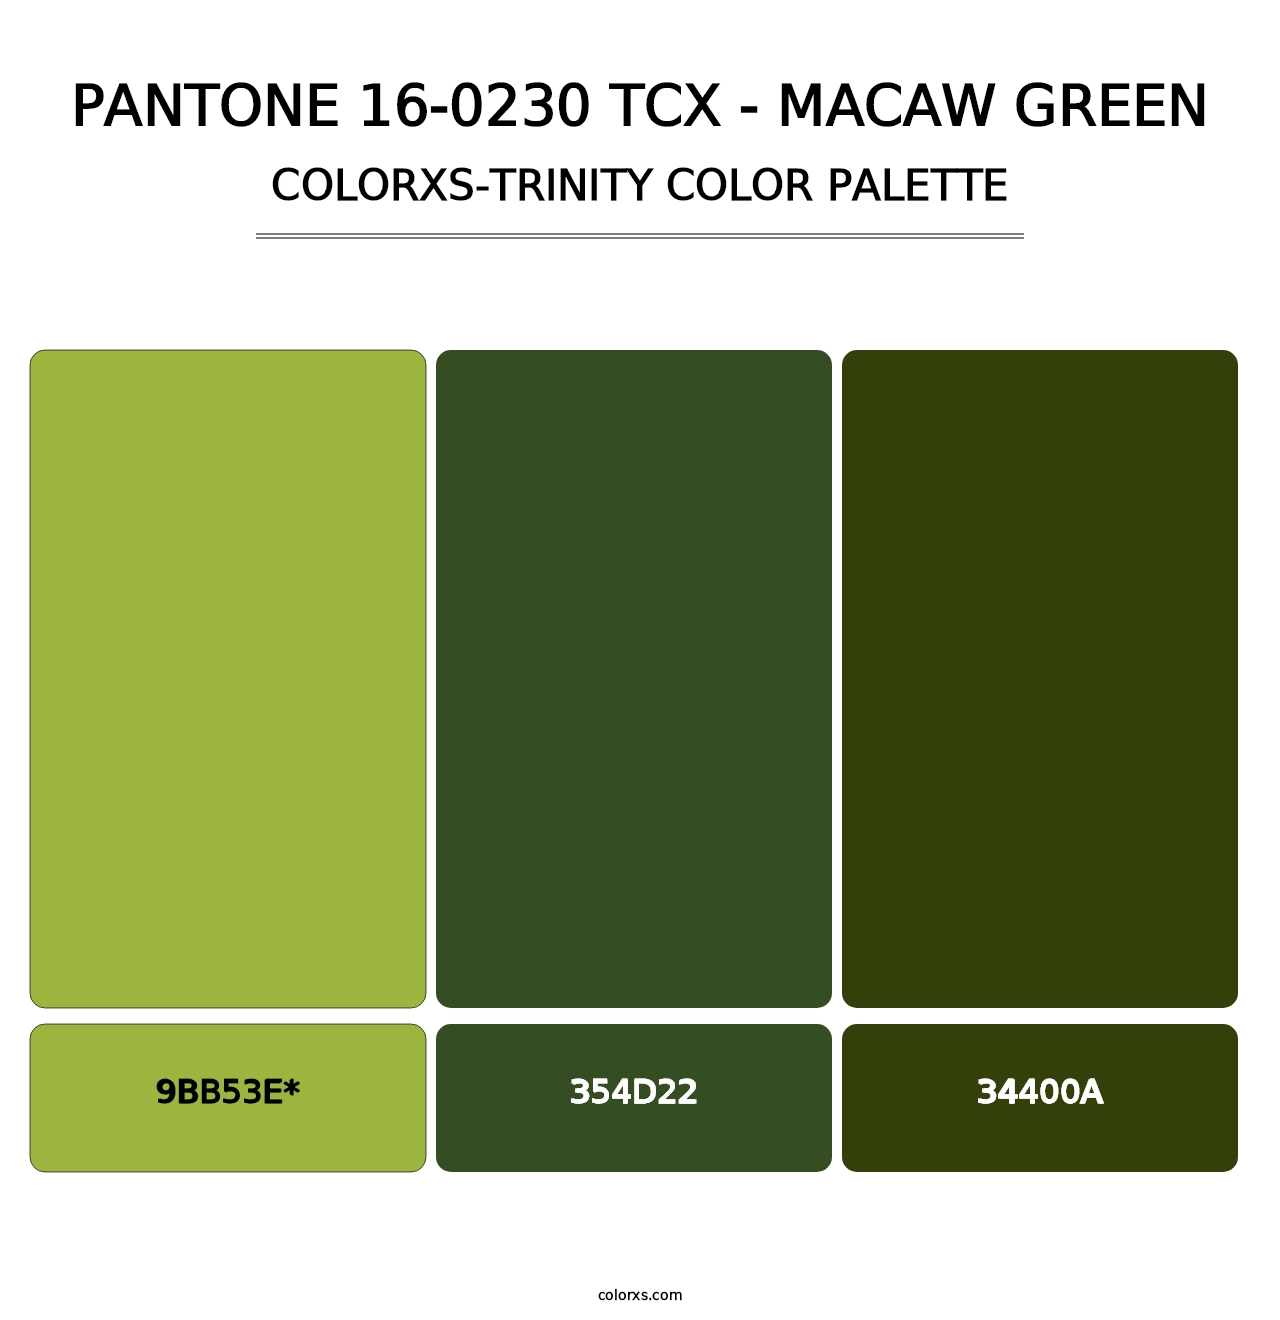 PANTONE 16-0230 TCX - Macaw Green - Colorxs Trinity Palette